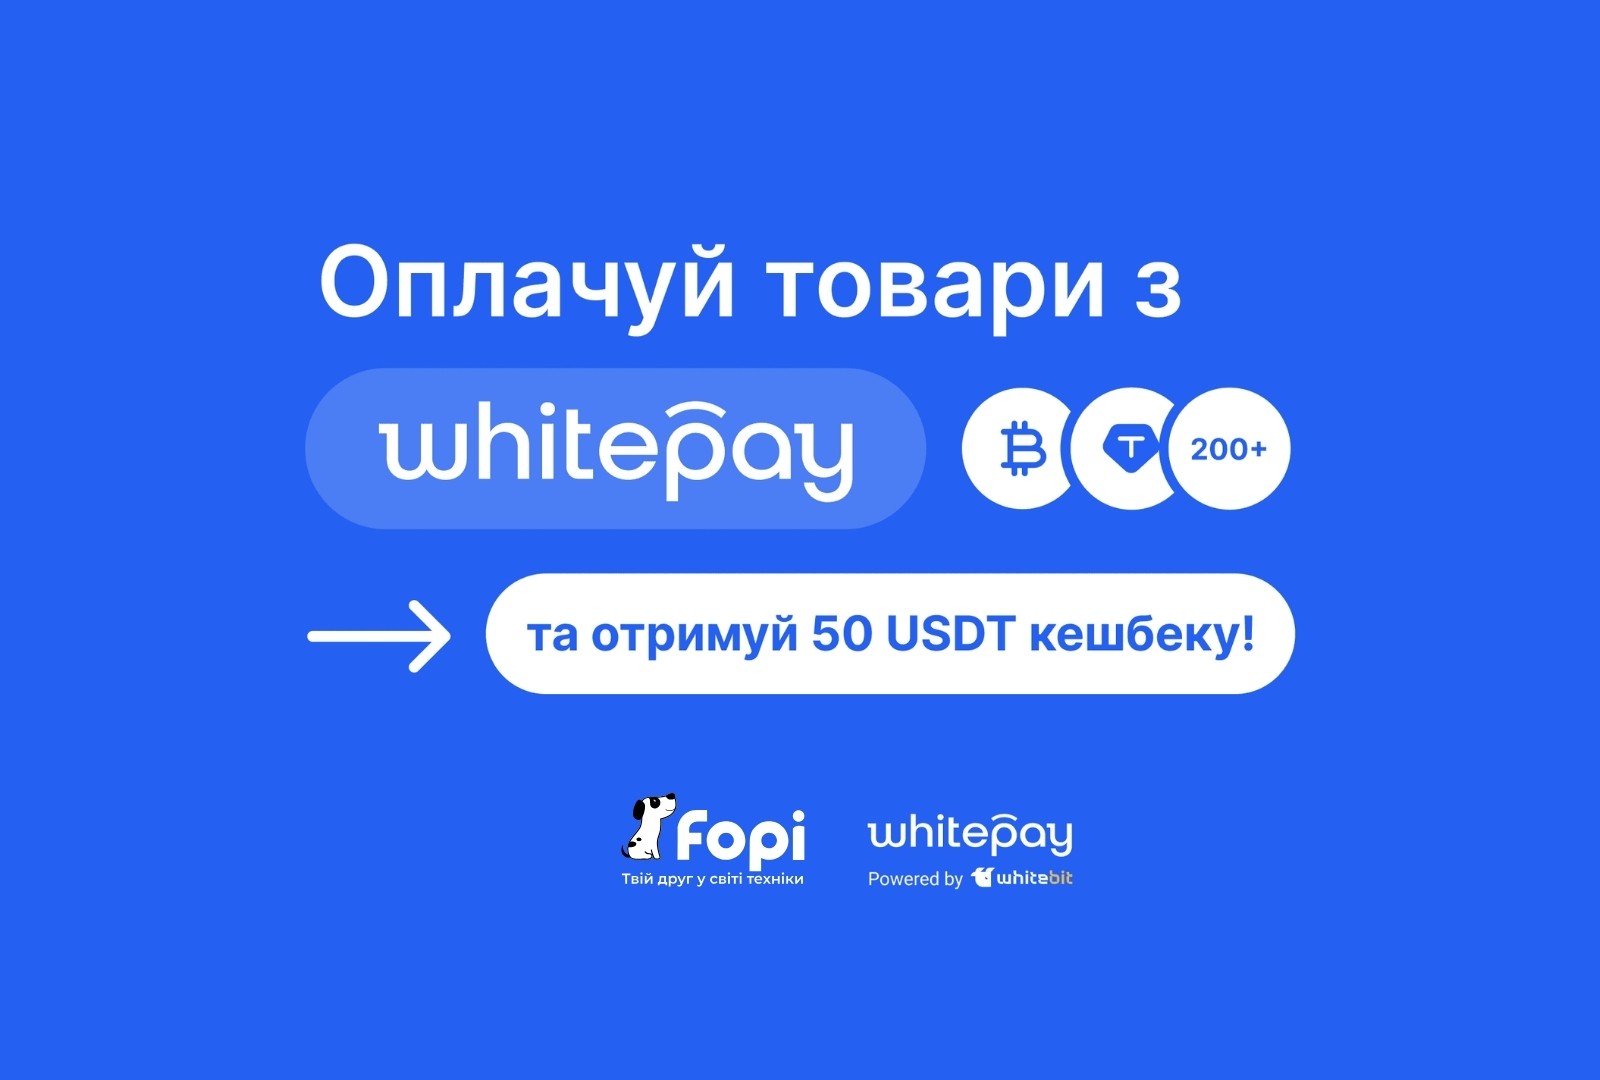 Вигравай 50 USDT кешбеку: Купуй товари в магазині Fopi з Whitepay